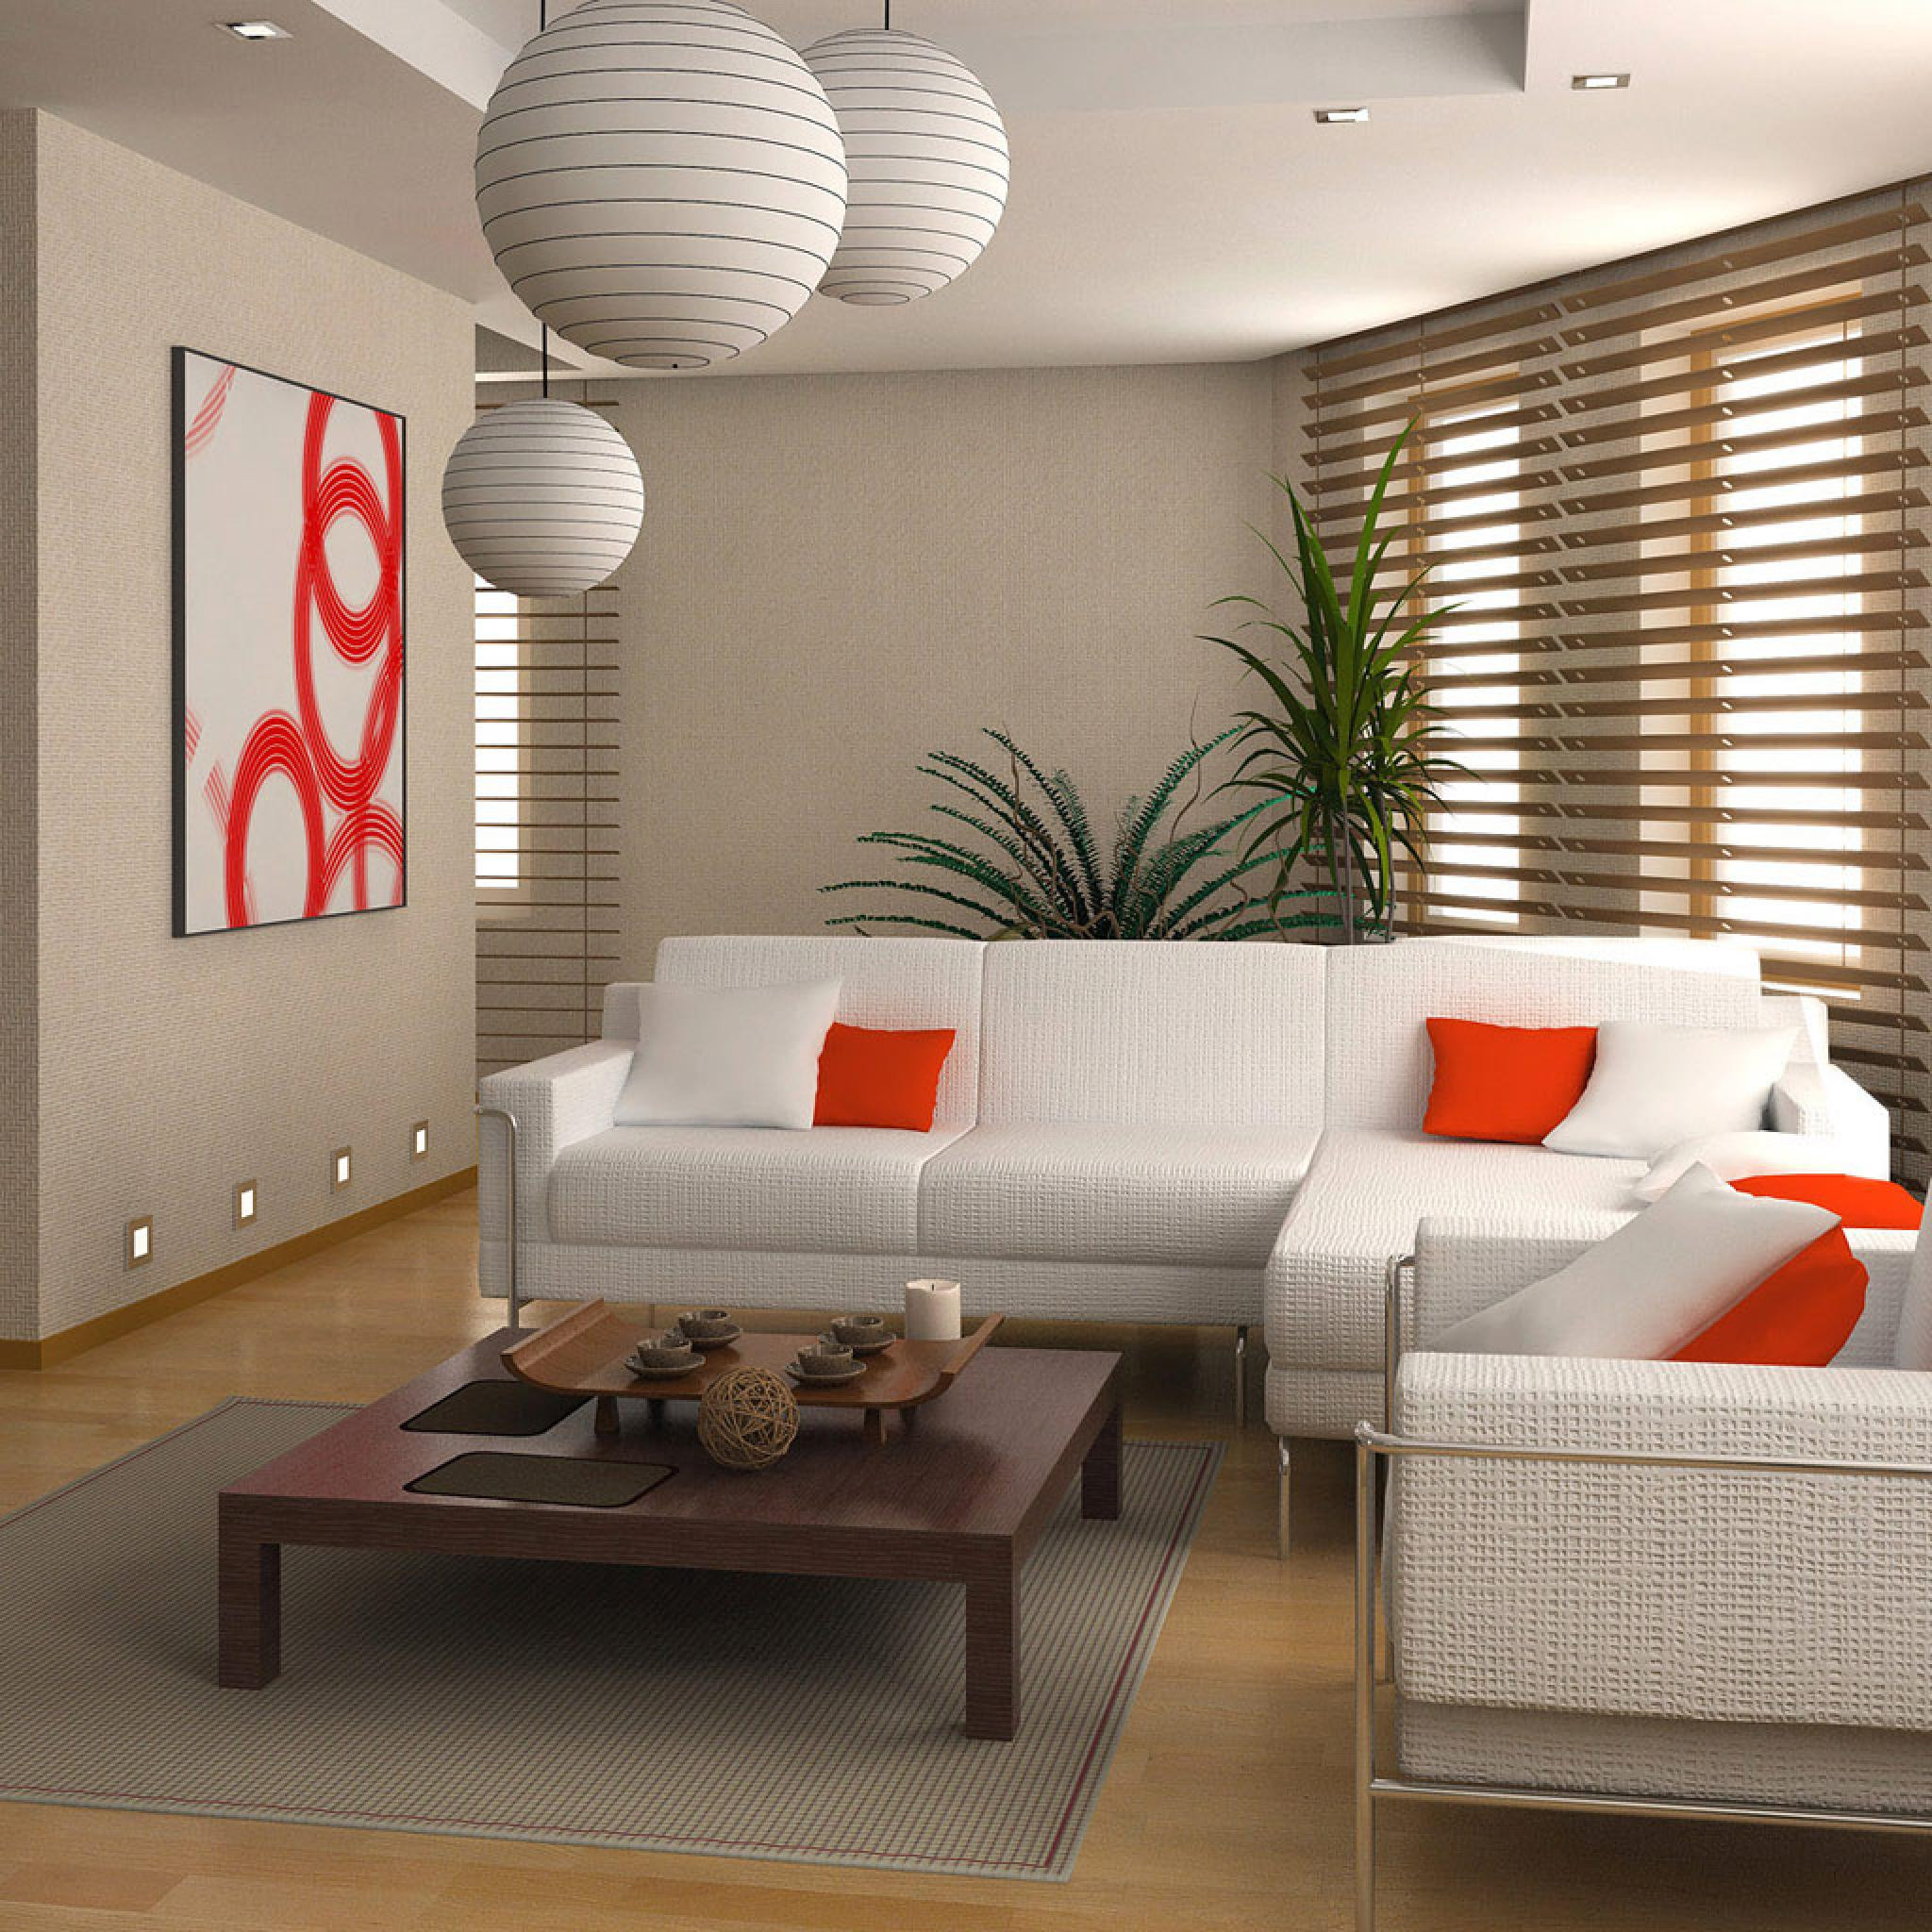 Living Room Interior Ideas
 Miscellaneous Modern Living Room Interior Design Ideas